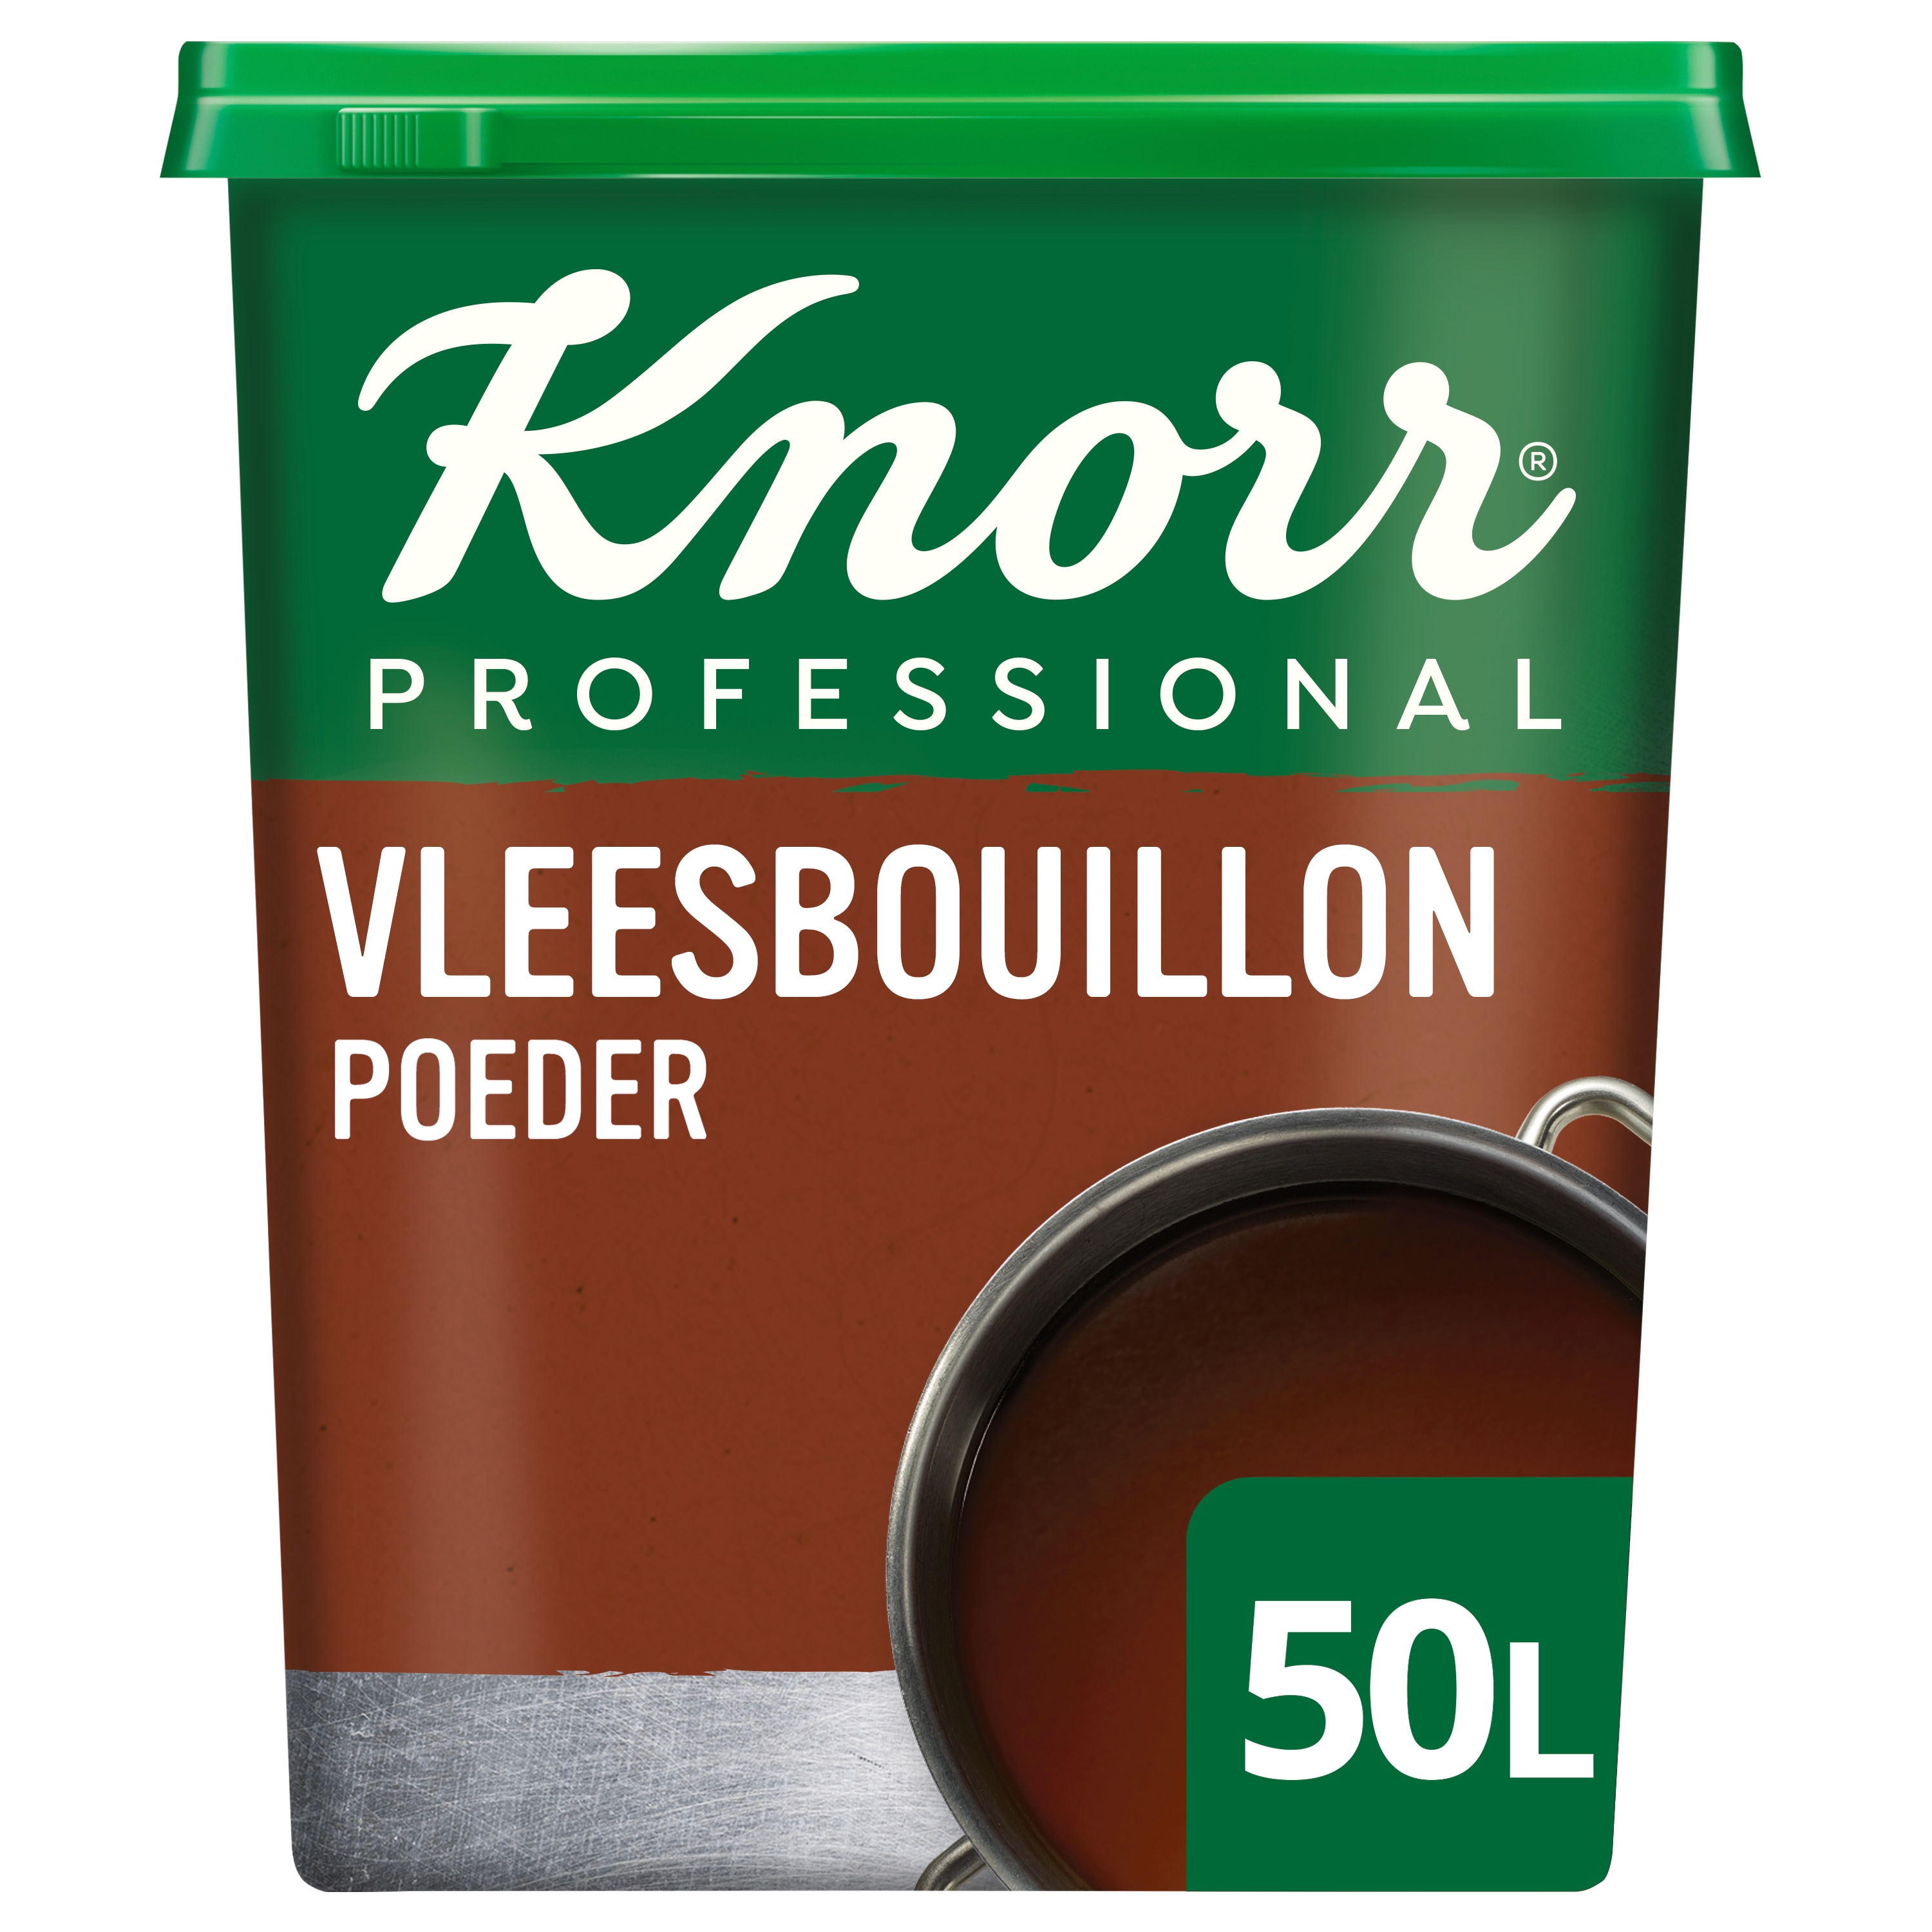 Knorr Vleesbouillon Authentiek Poeder opbrengst 50L - 